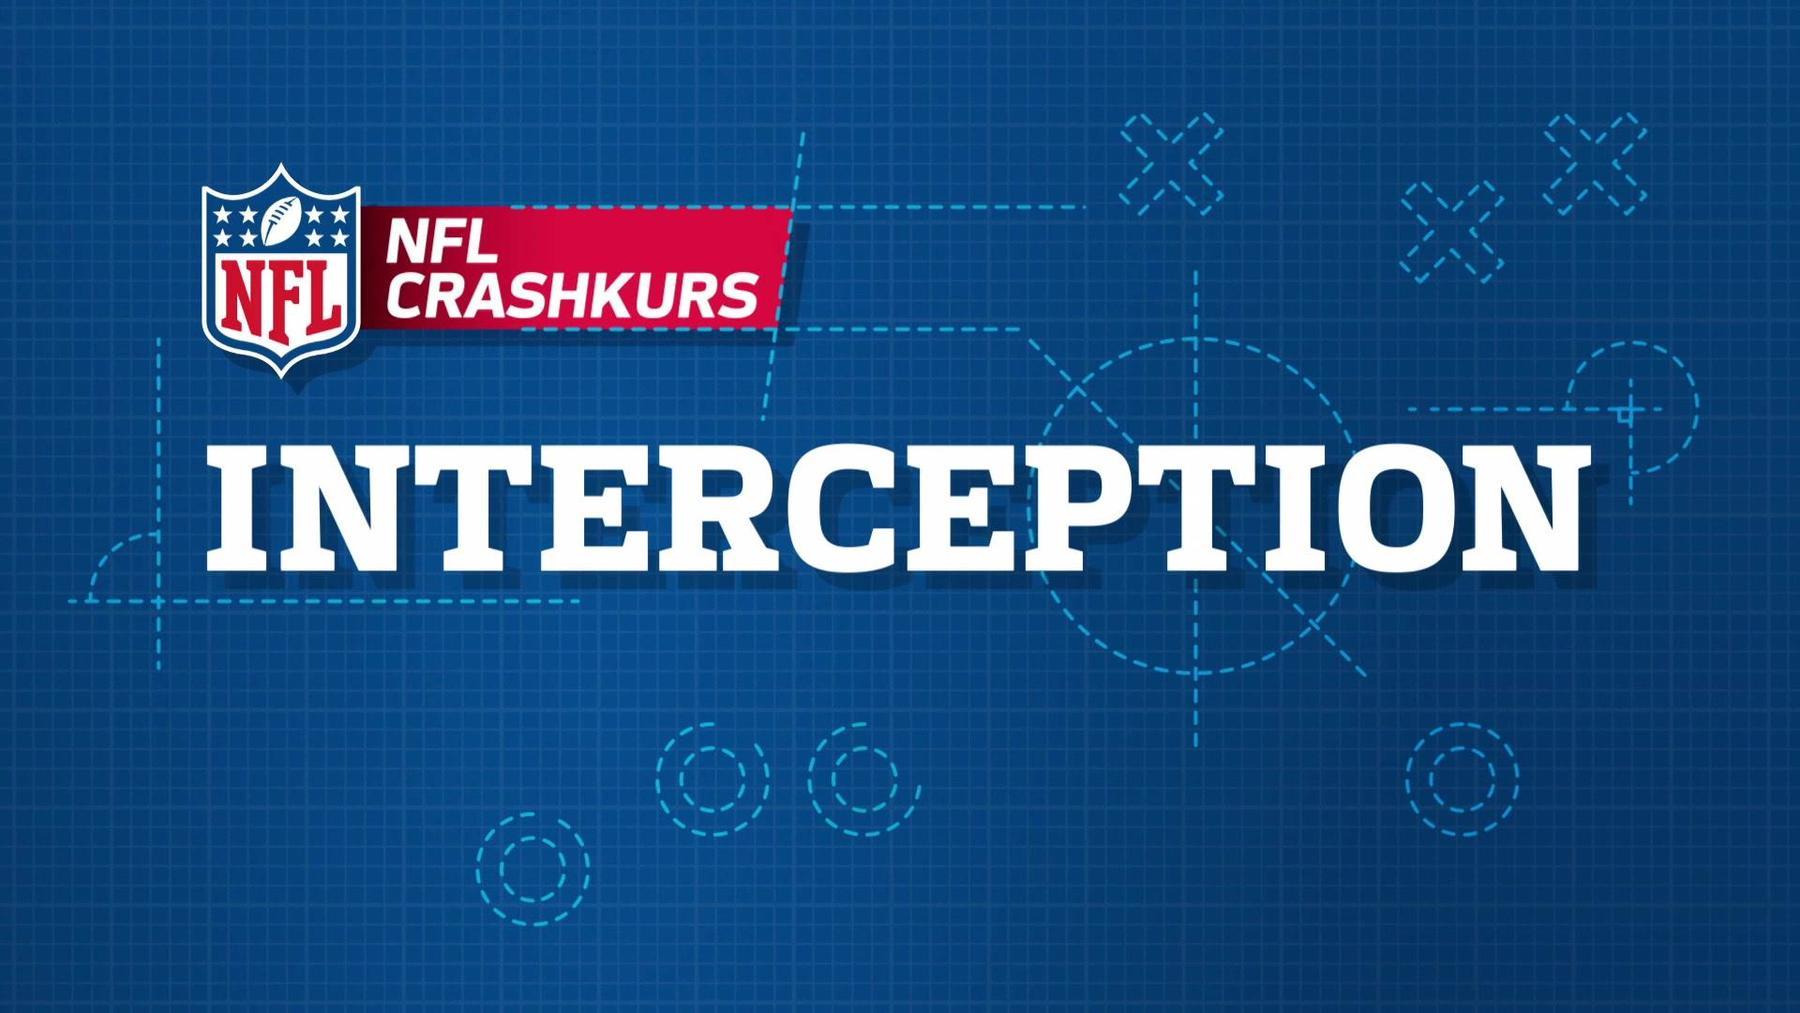 NFL Crashkurs: Interception